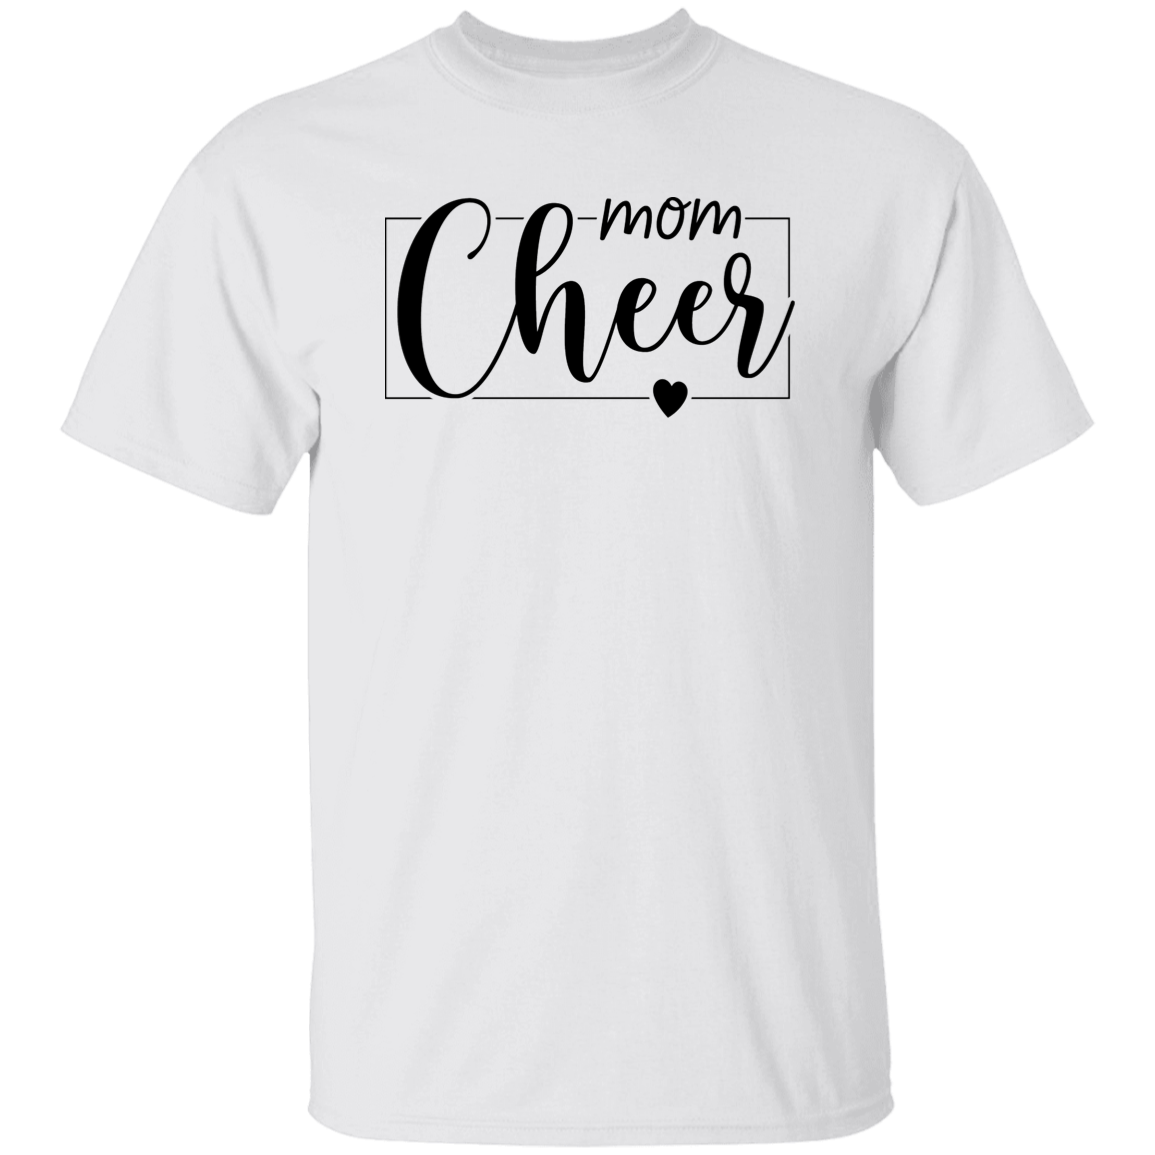 Cheer Mom Unisex Tee